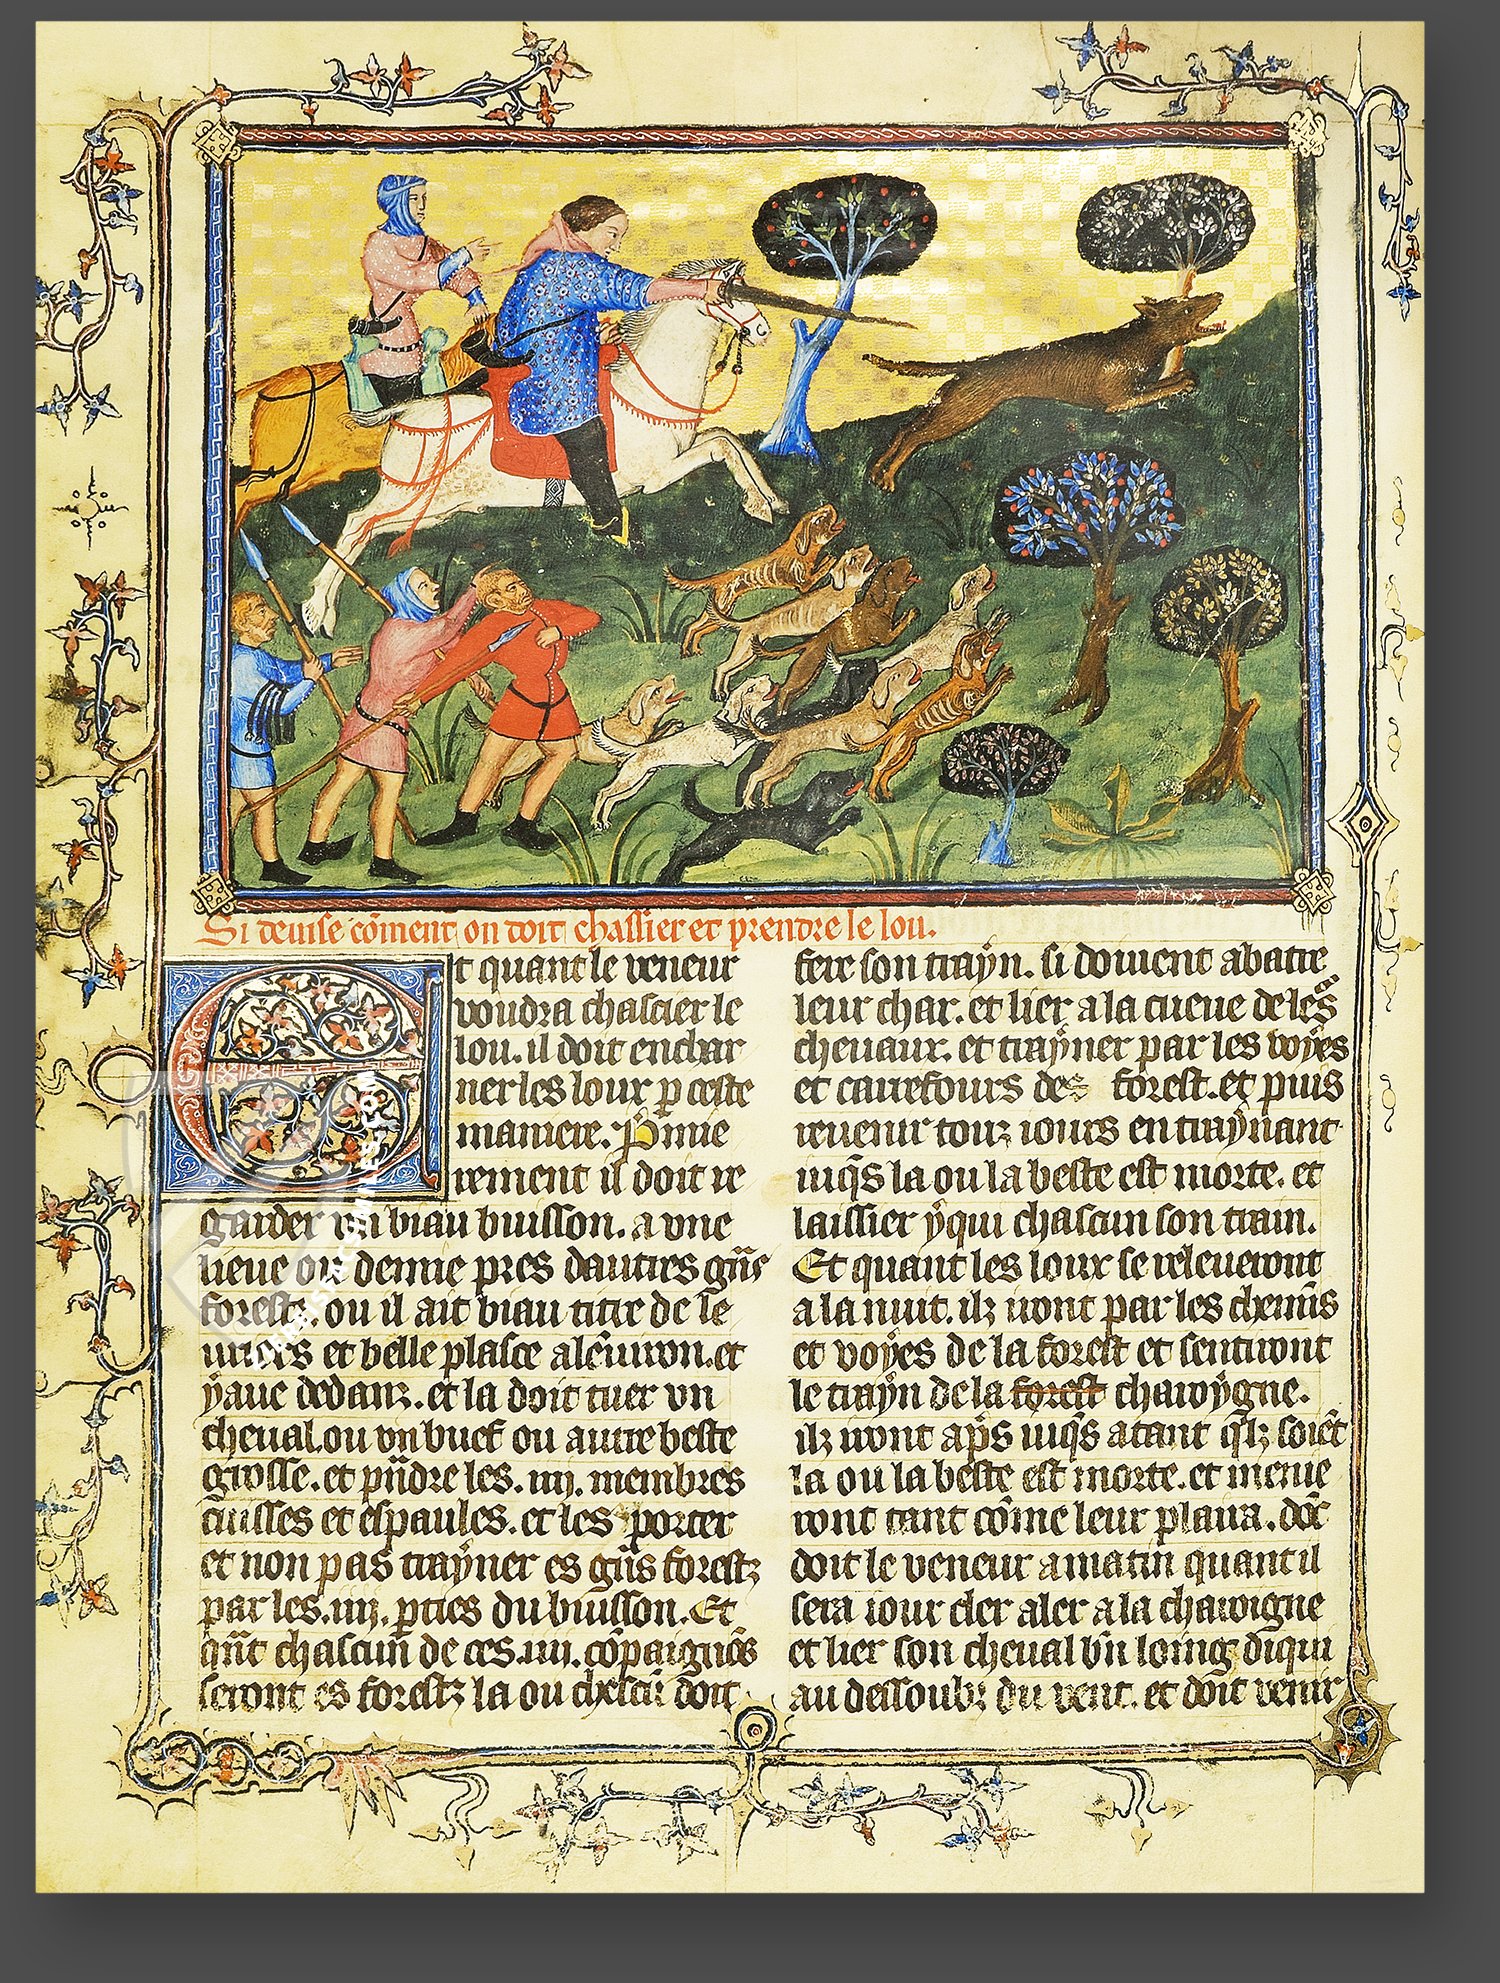 Gaston Phoebus, Livre de chasse (Book of Hunting), Facsimile Edition